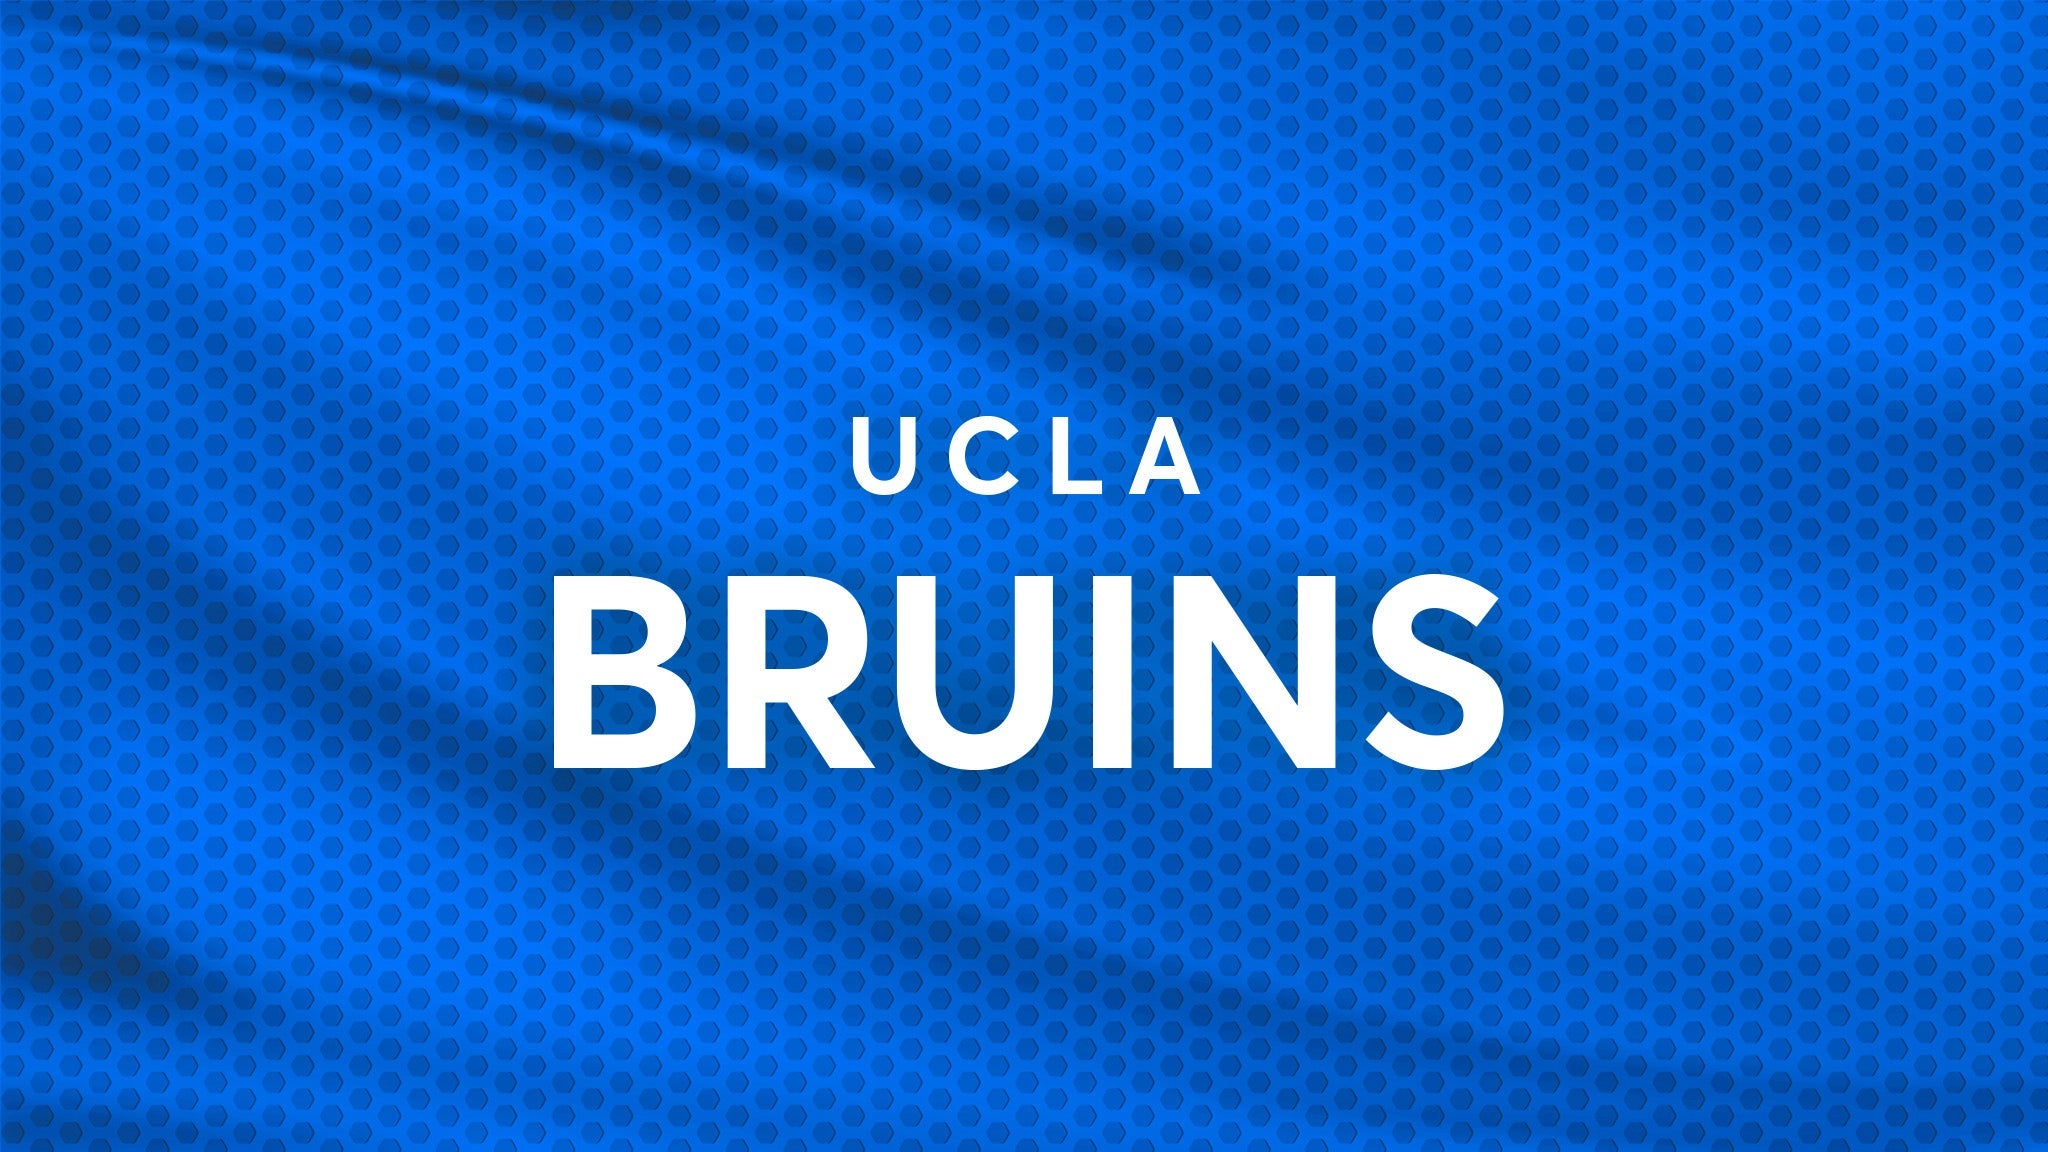 UCLA Bruins Football vs. Arizona State Sun Devils Football - Pasadena, CA 91103